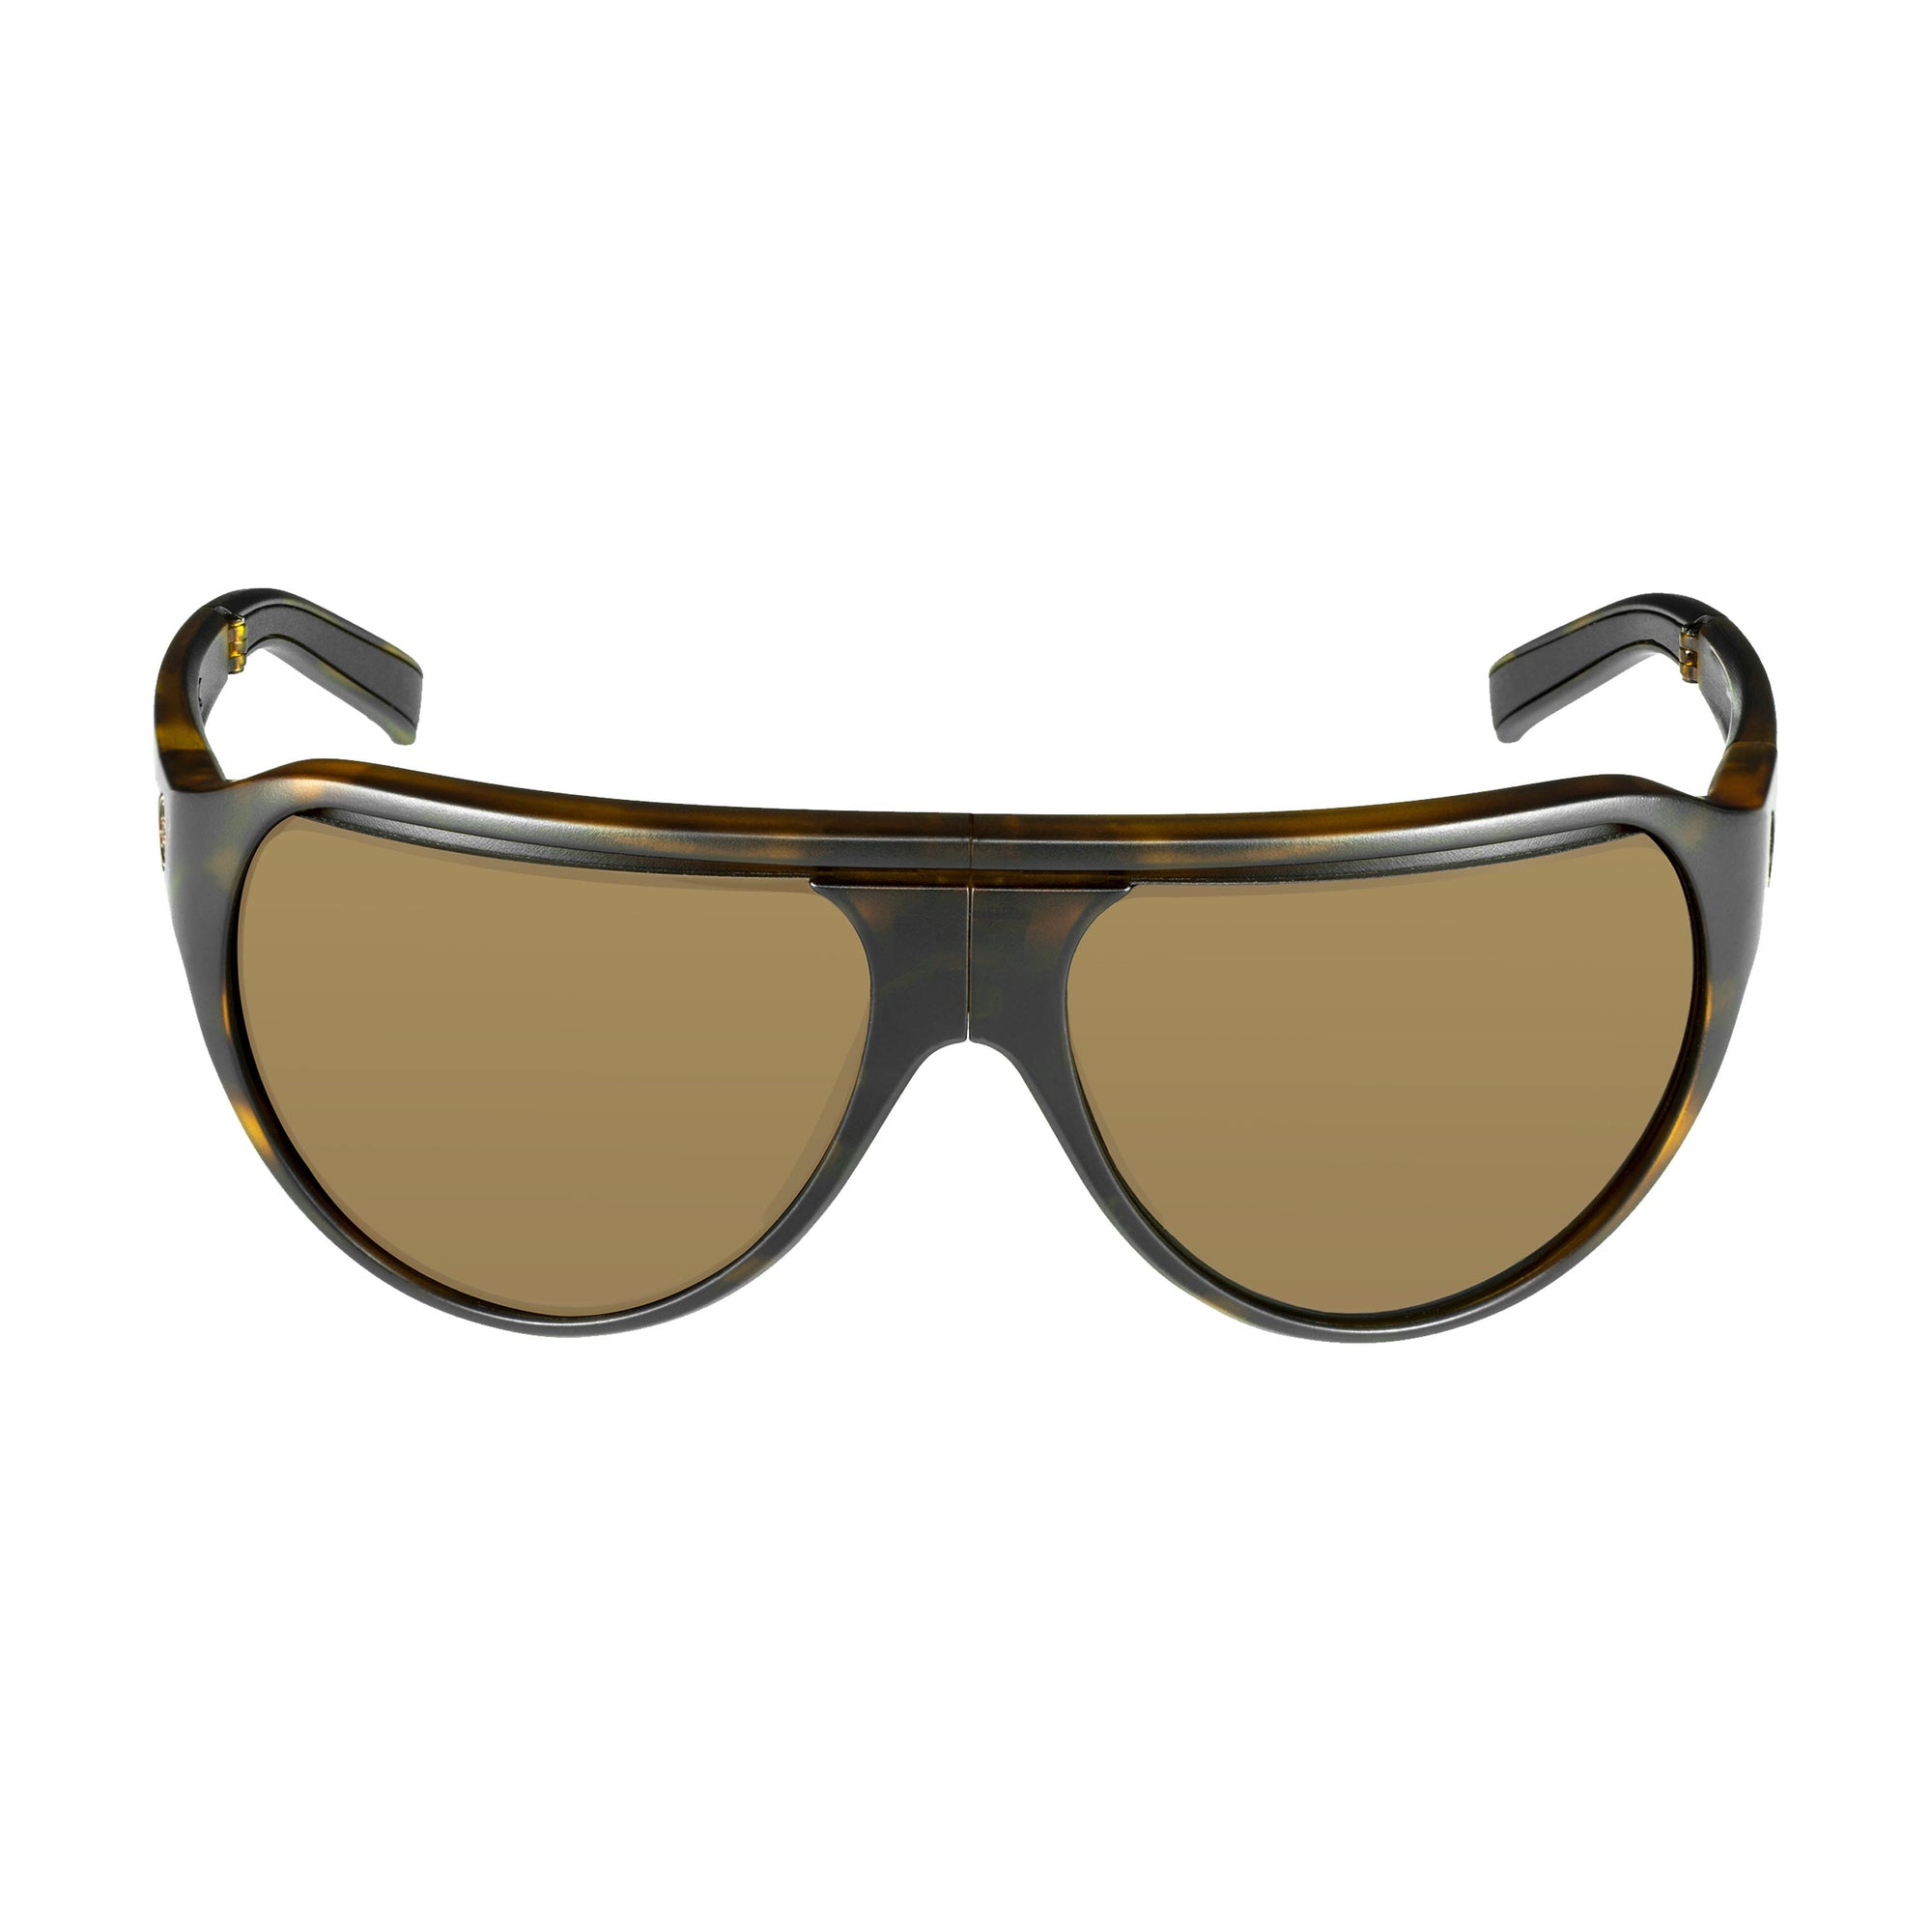 Popticals, Premium Compact Sunglasses, PopAir, 300010-CUNS, Standard Sunglasses, Matte Tortoise Frame, Brown Lenses, Glam View